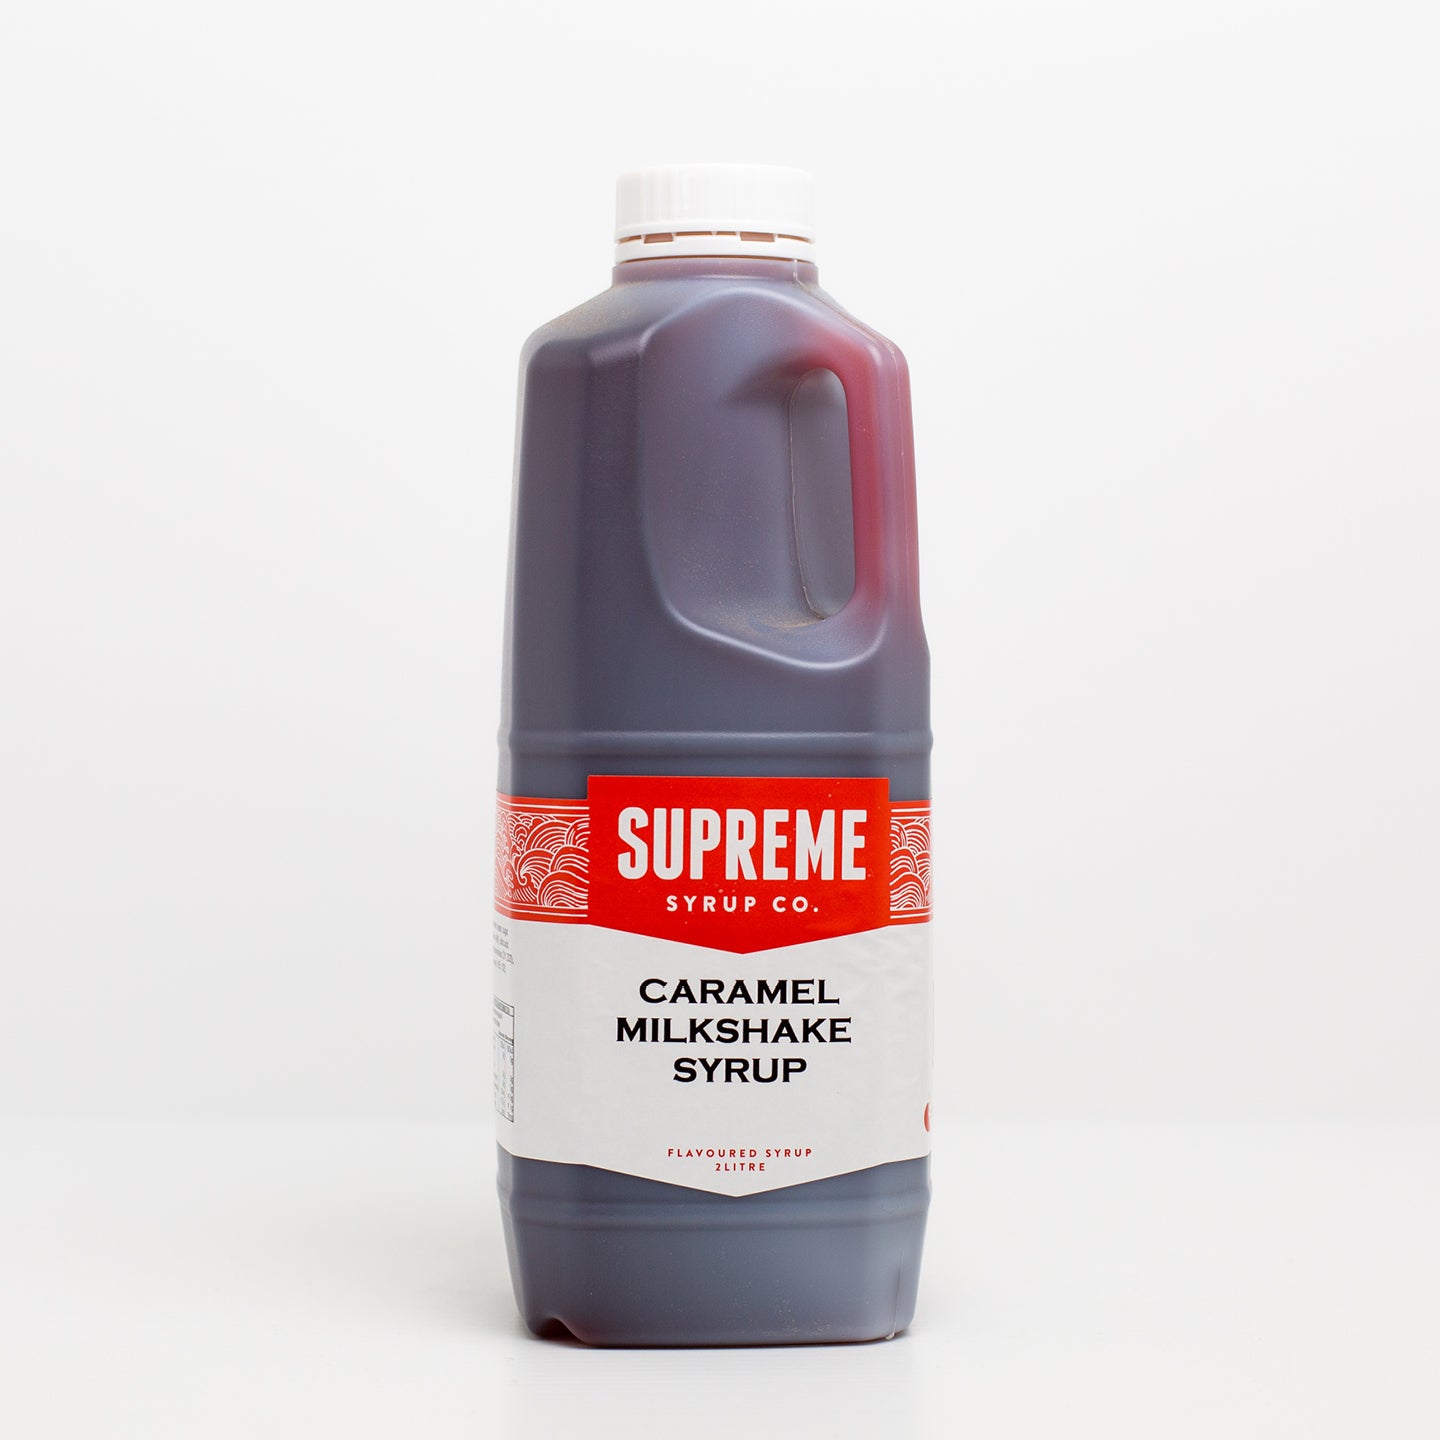 Supreme Milkshake Syrup 2L CARAMEL